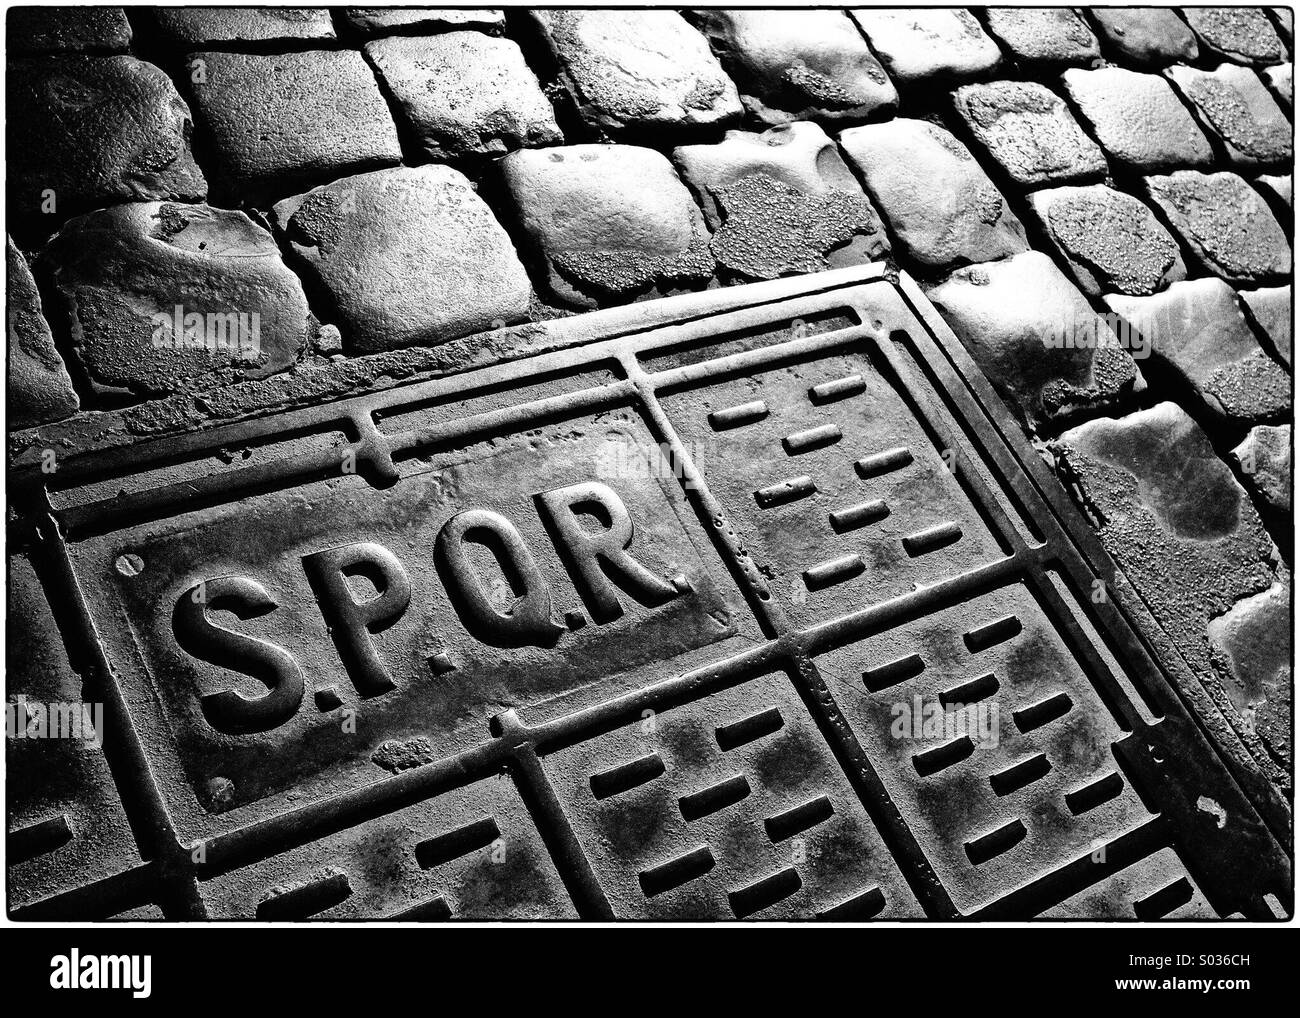 S.P.Q.R. On manhole cover, Rome, Italy Stock Photo